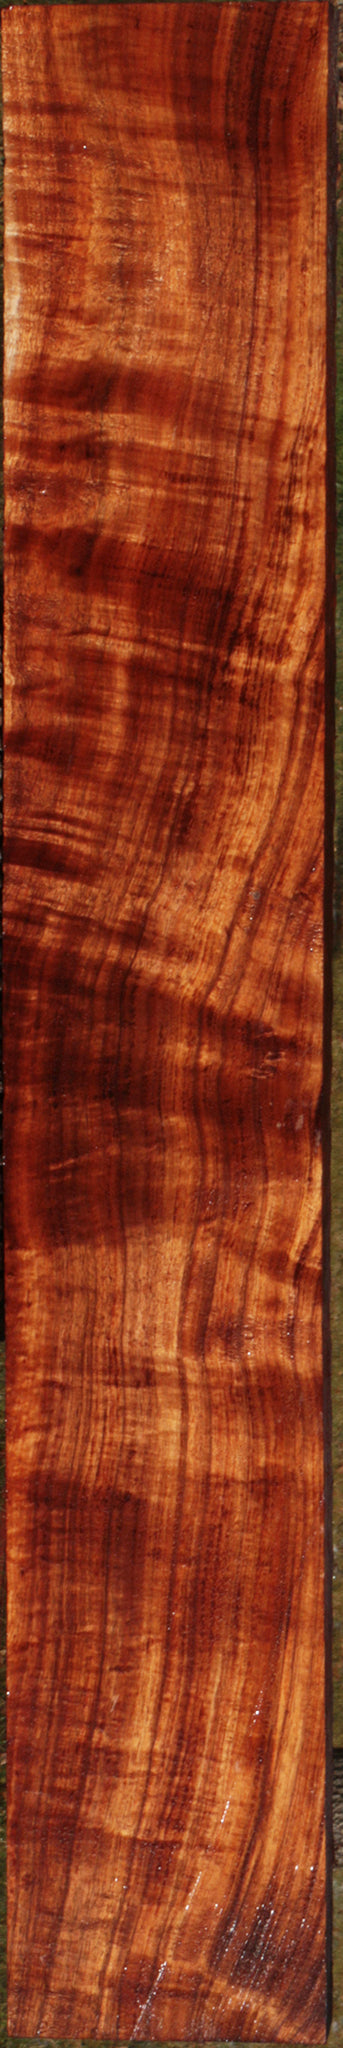 Exhibition Hawaiian Koa Lumber